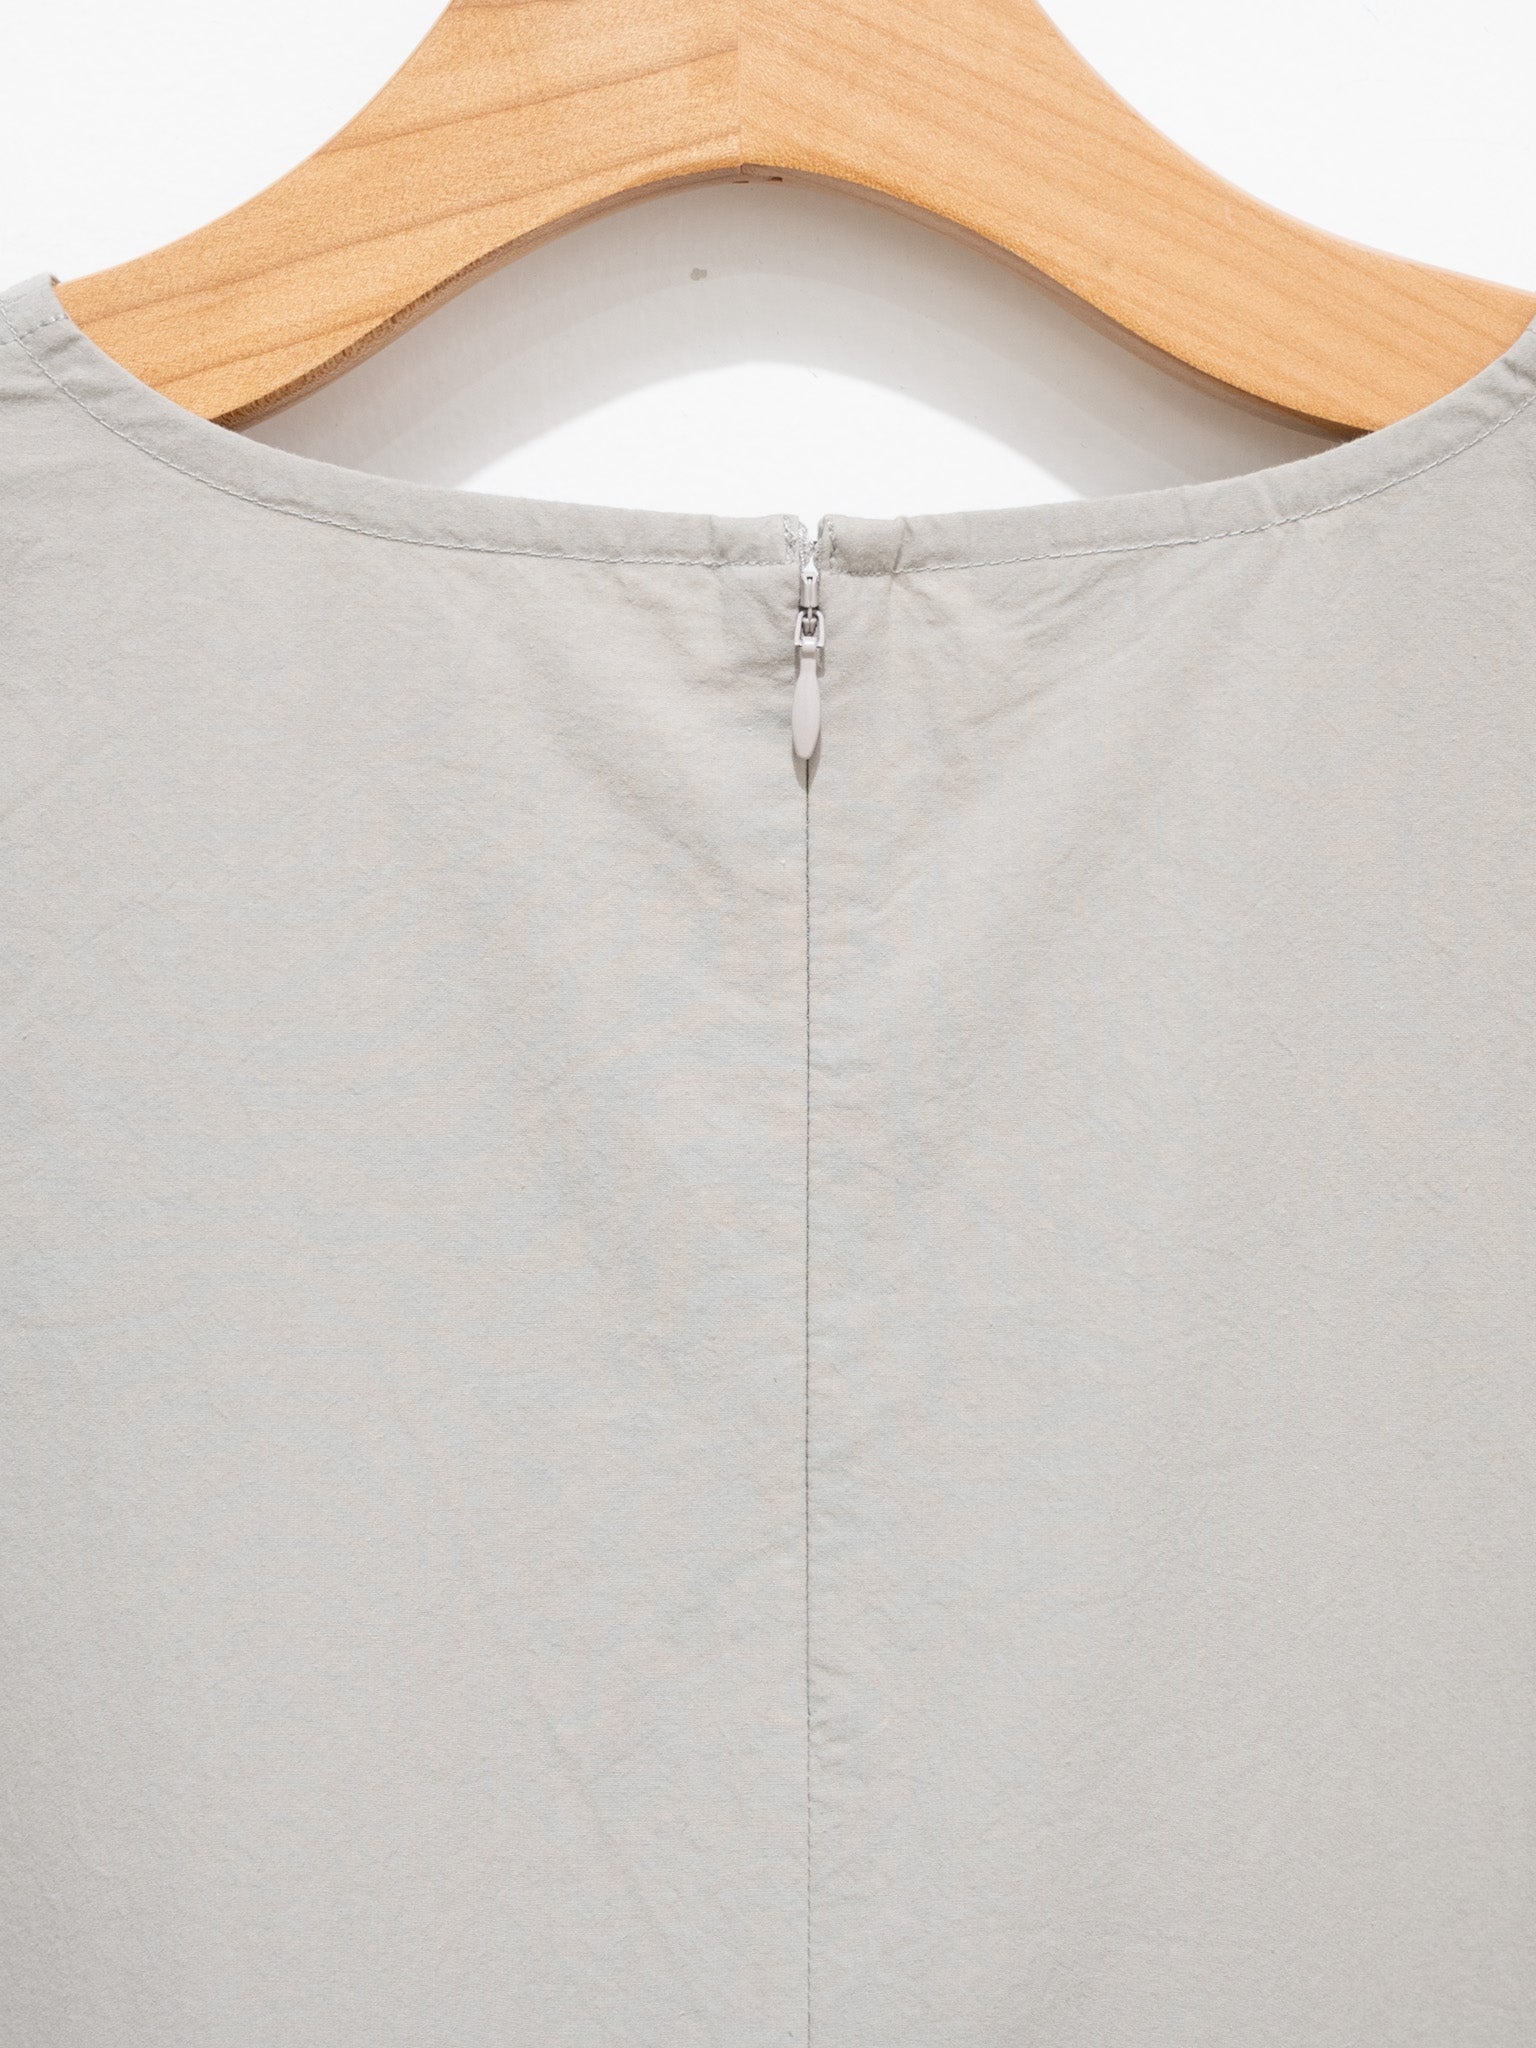 Namu Shop - ICHI Pocket Dress - Gray